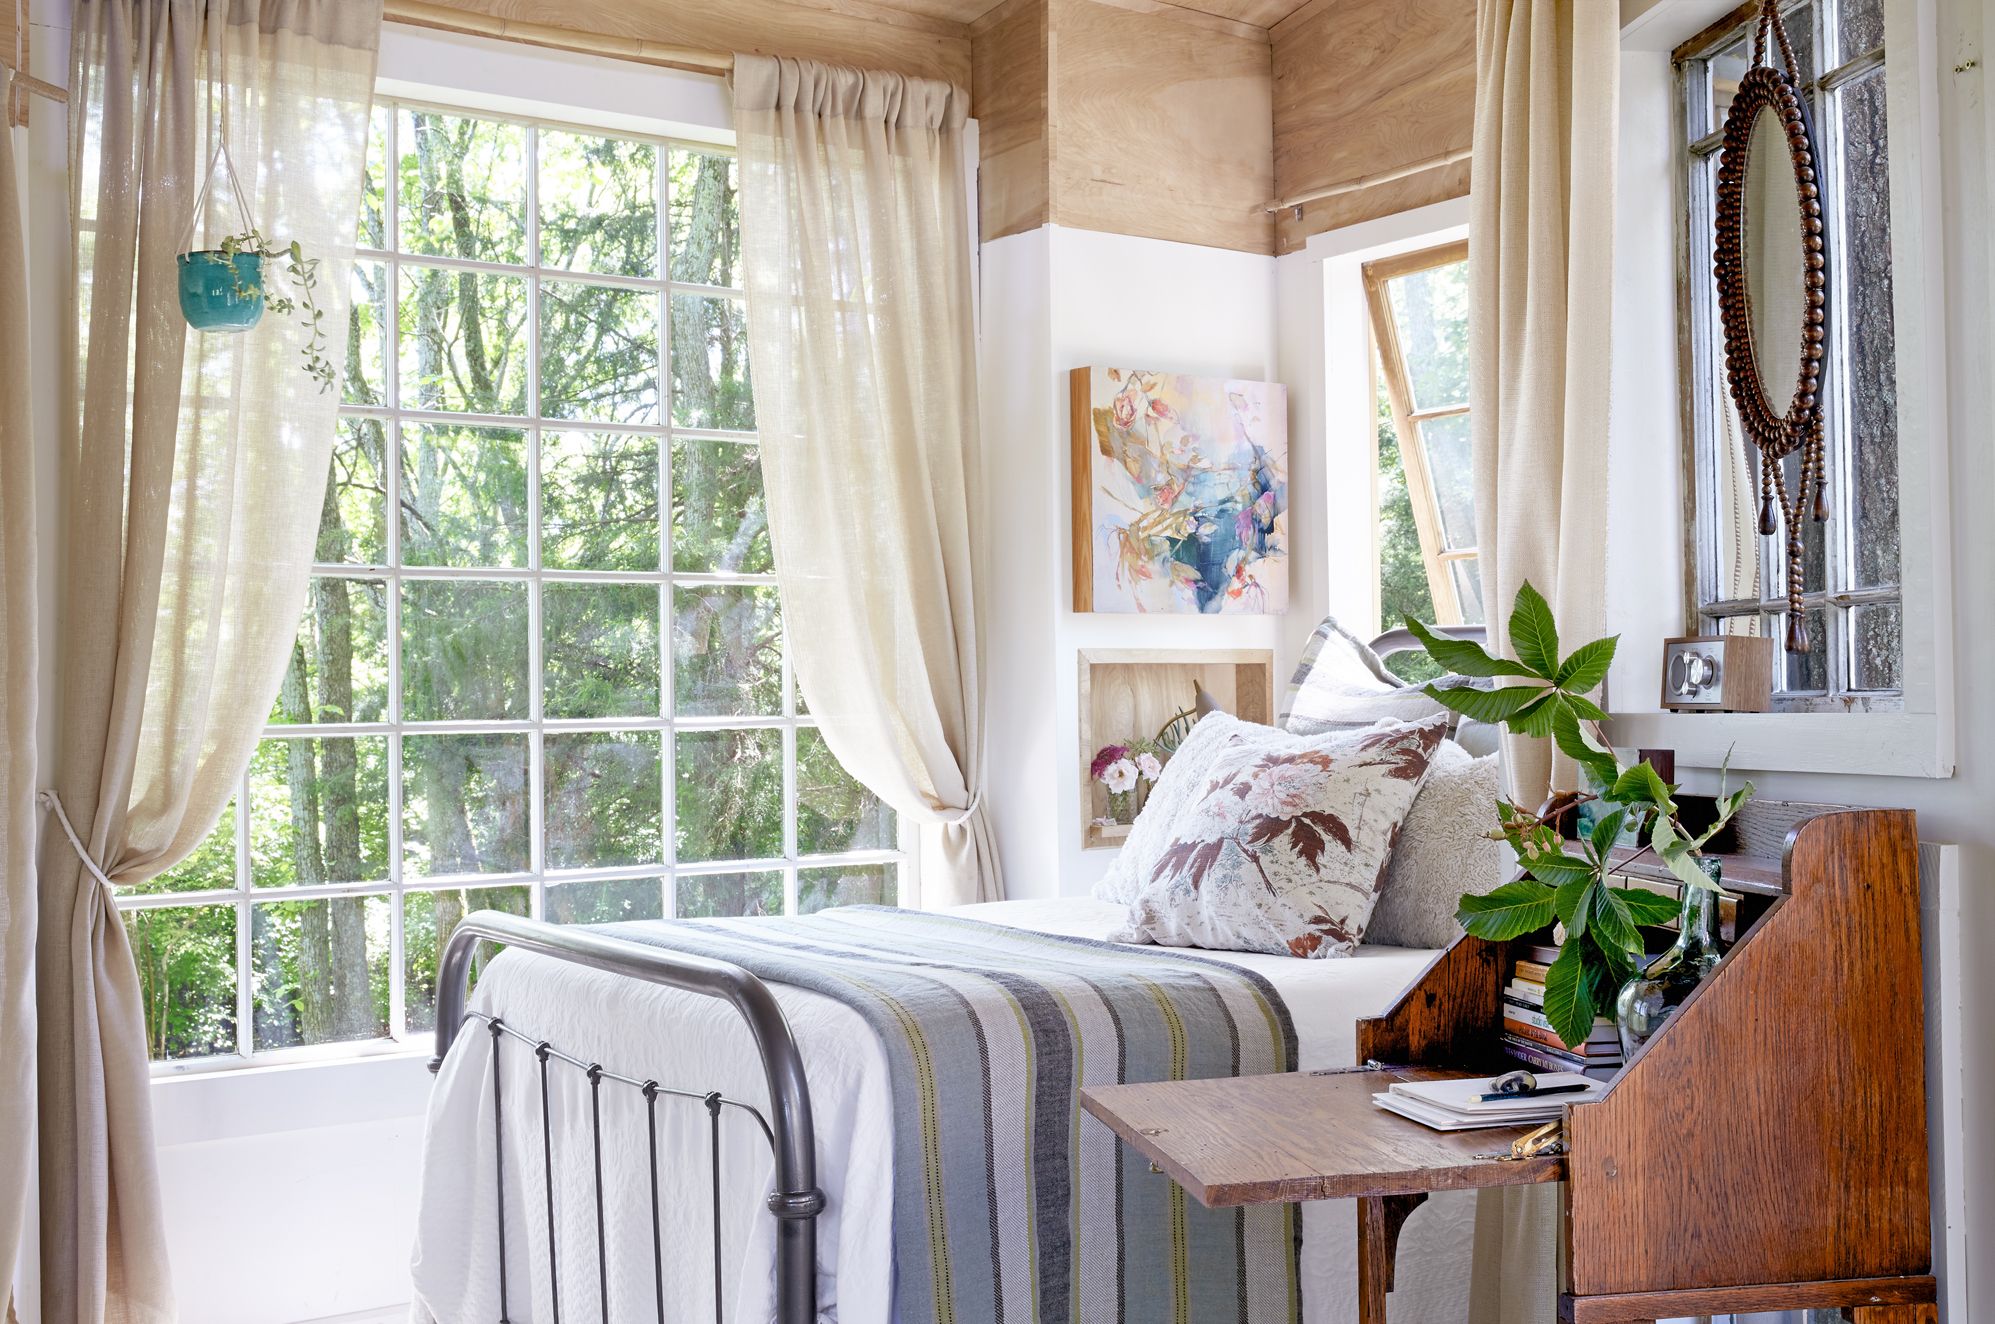 Vintage Charm: Create a vintage-inspired bedroom